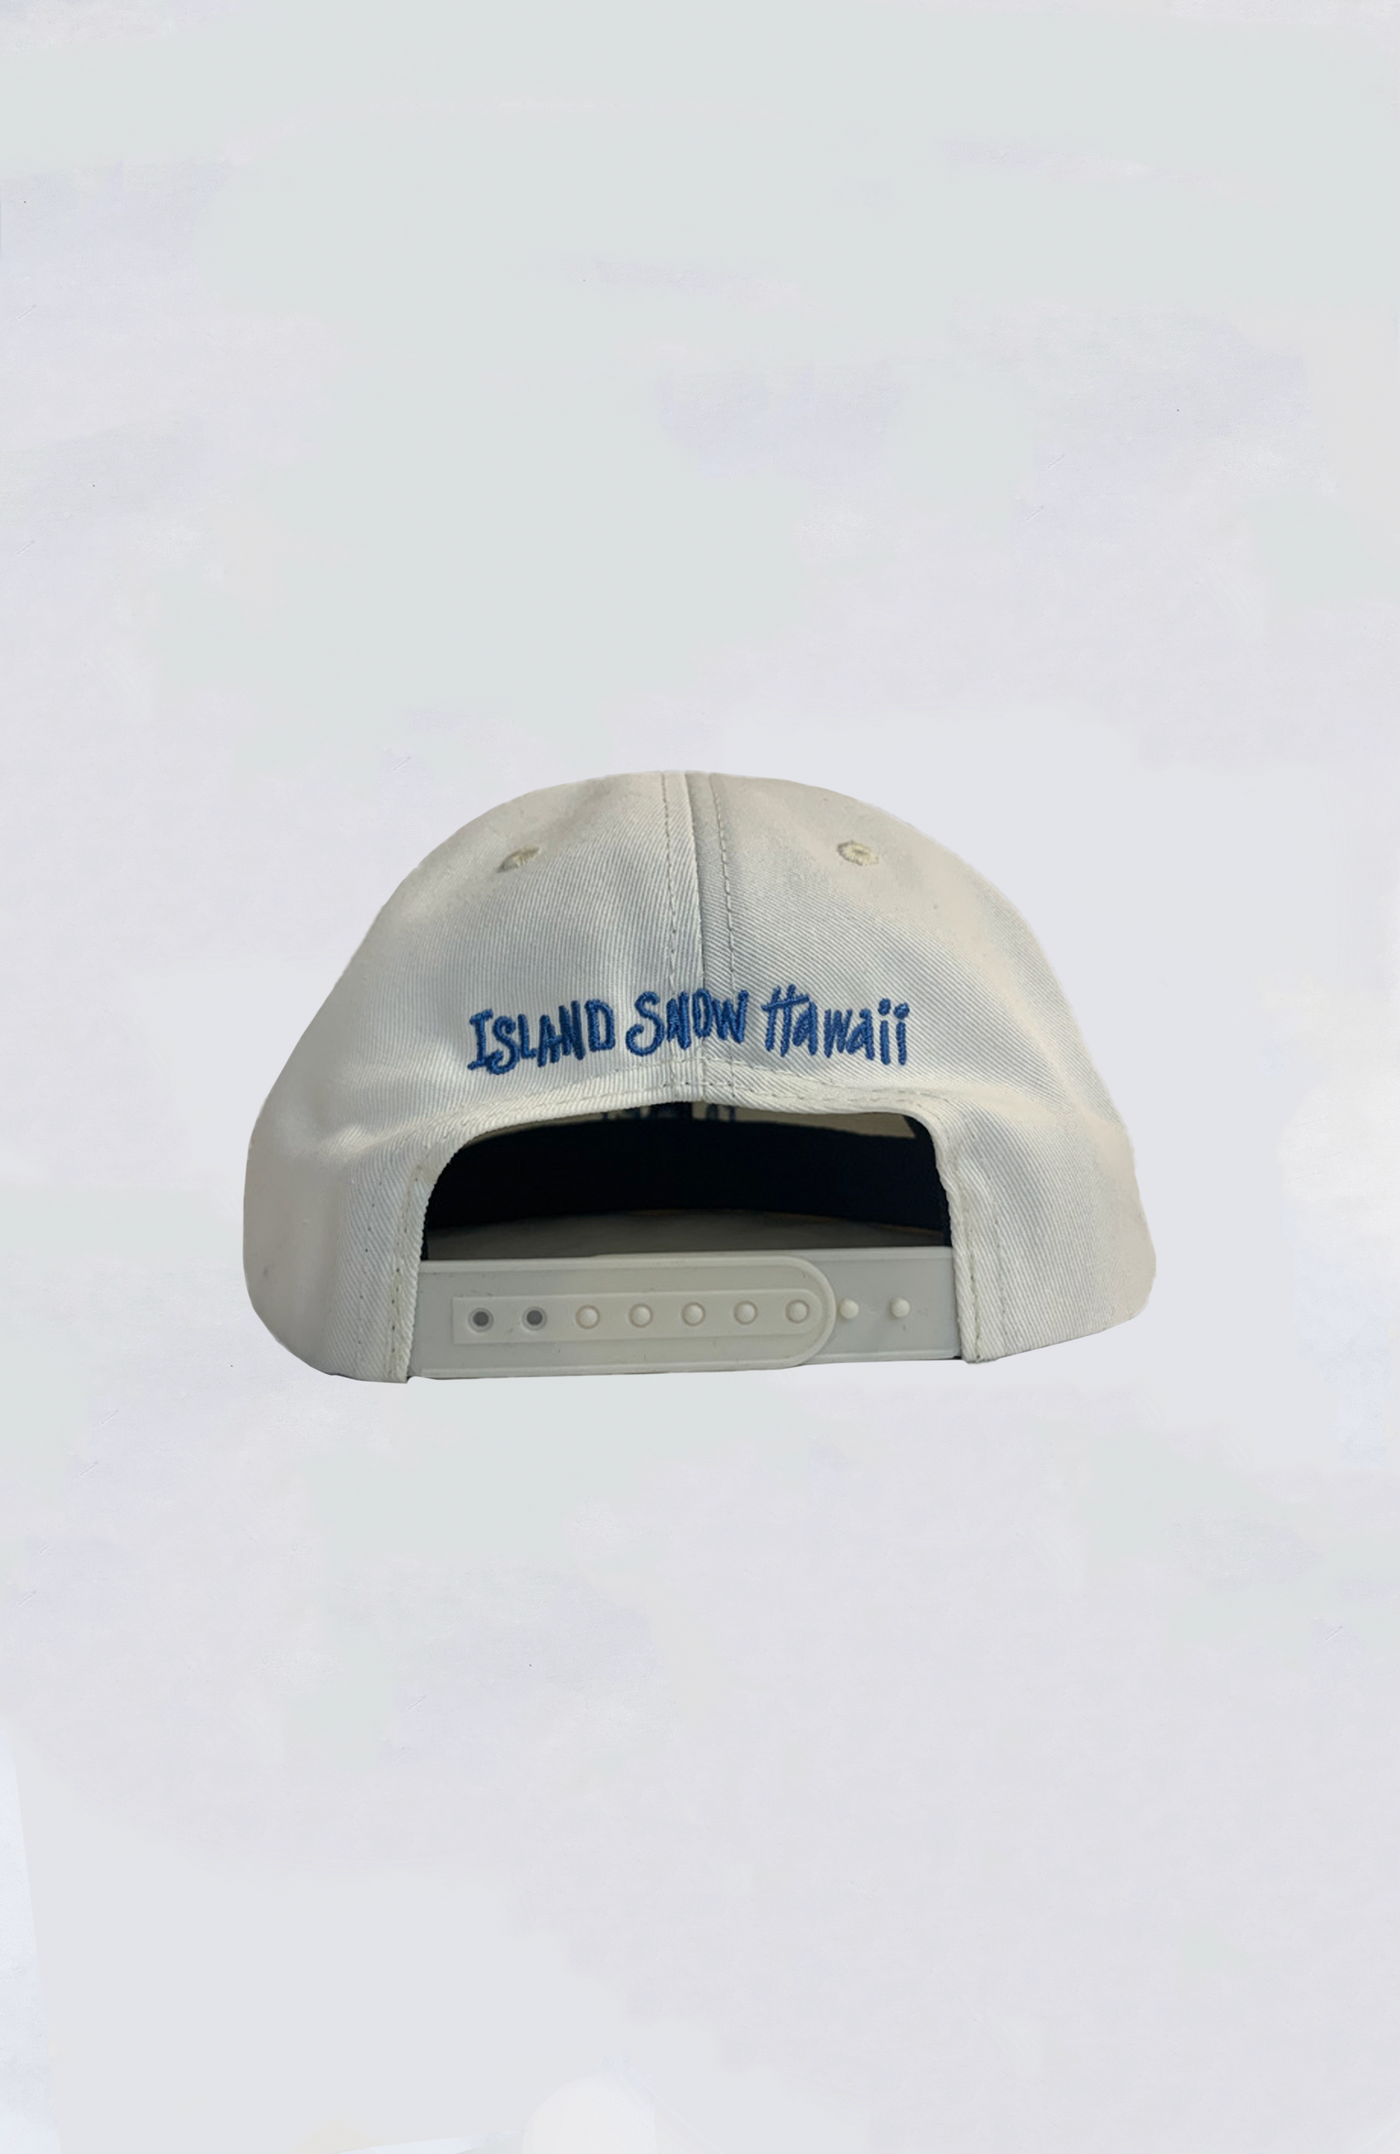 Island Snow Hawaii - IS True to Form Snapback Hat